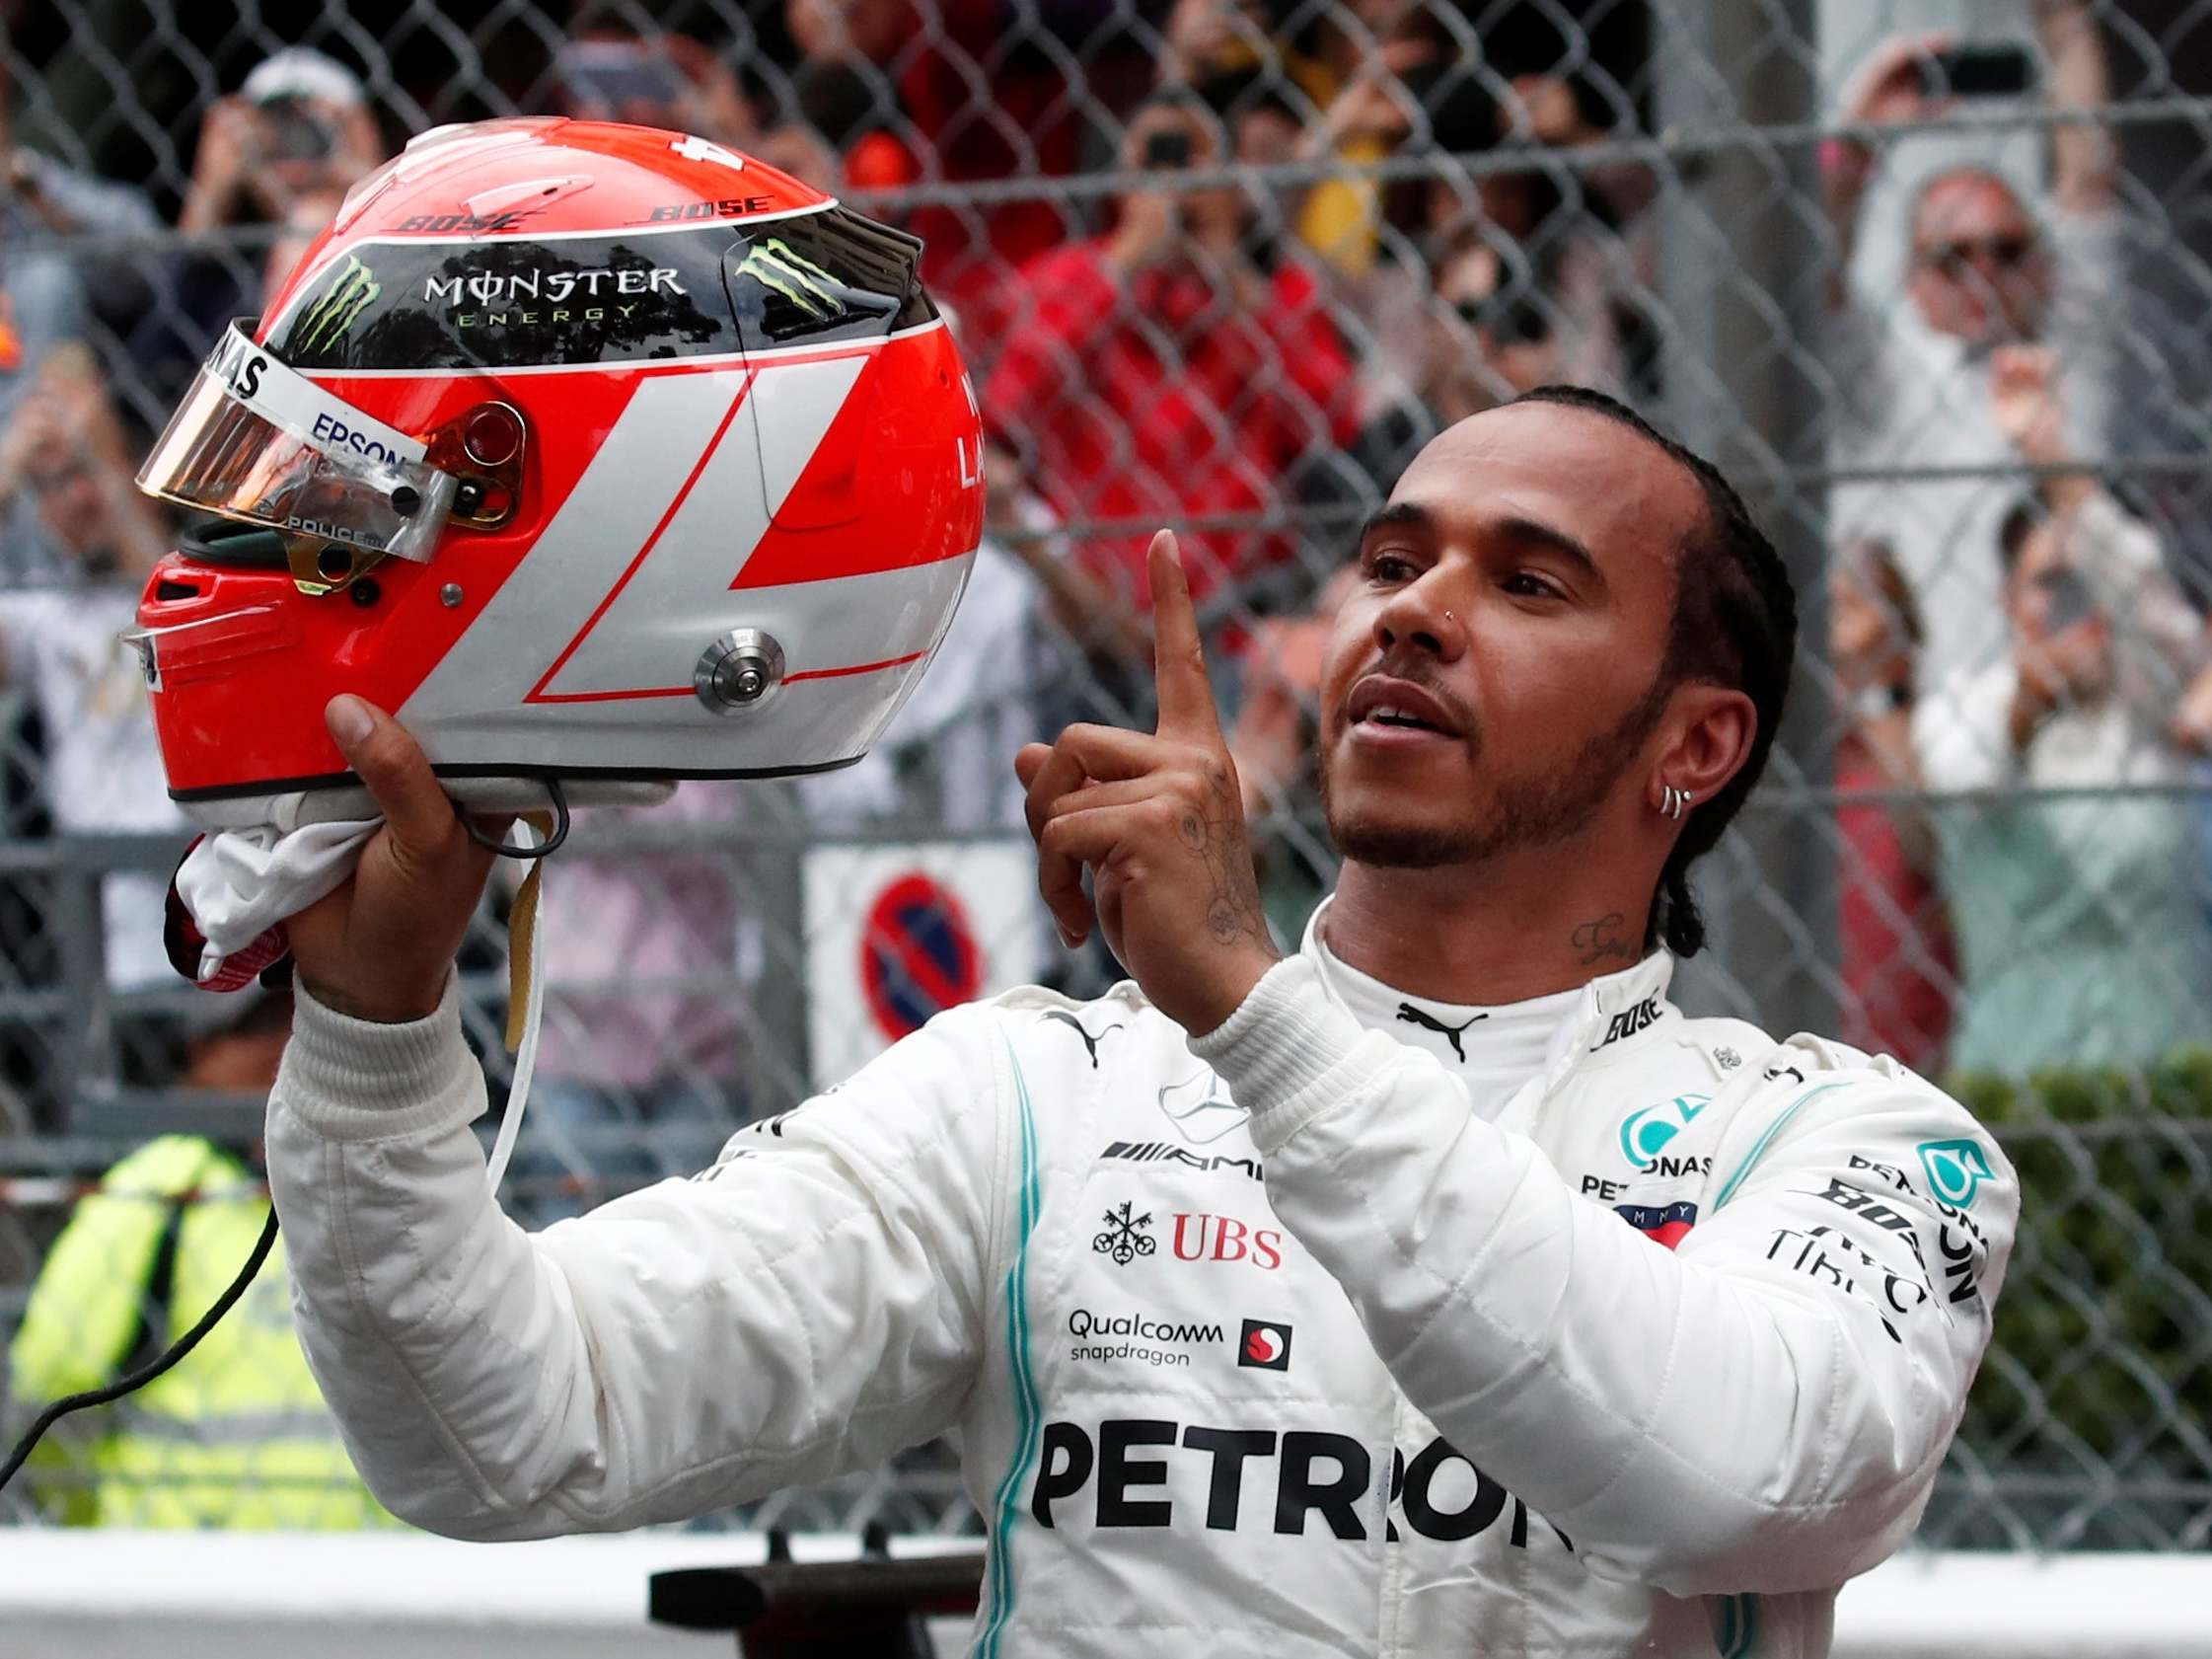 Monaco Grand Prix results: Lewis Hamilton holds off Max Verstappen to win breathtaking race for Niki Lauda